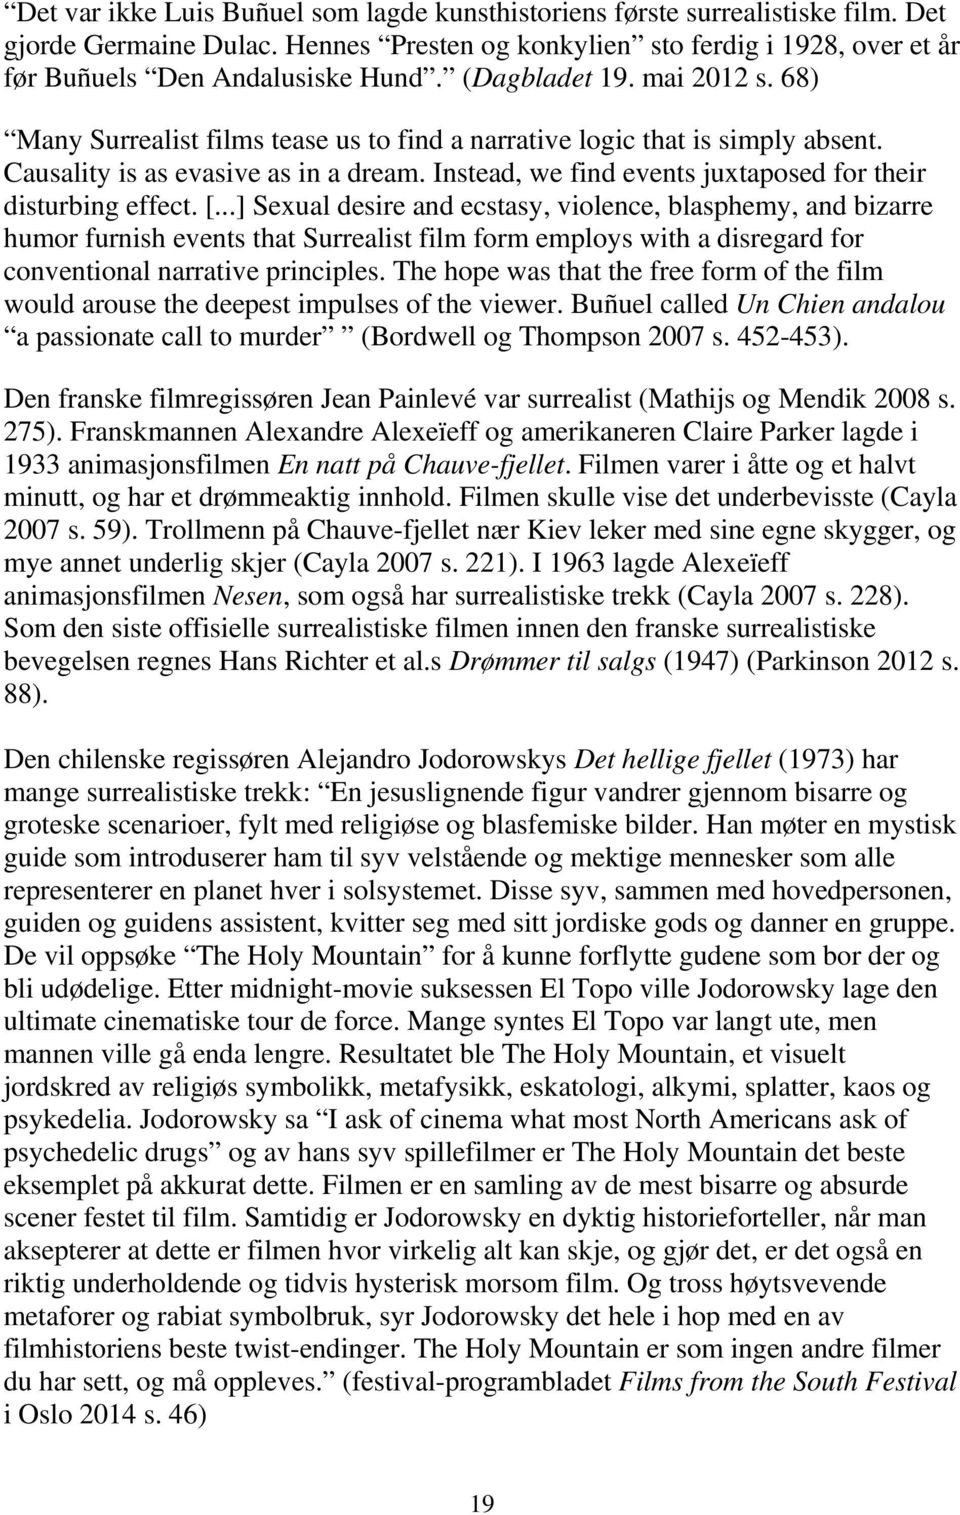 Bibliotekarstudentens nettleksikon om litteratur og medier. Av Helge  Ridderstrøm (førsteamanuensis ved Høgskolen i Oslo og Akershus) - PDF Free  Download